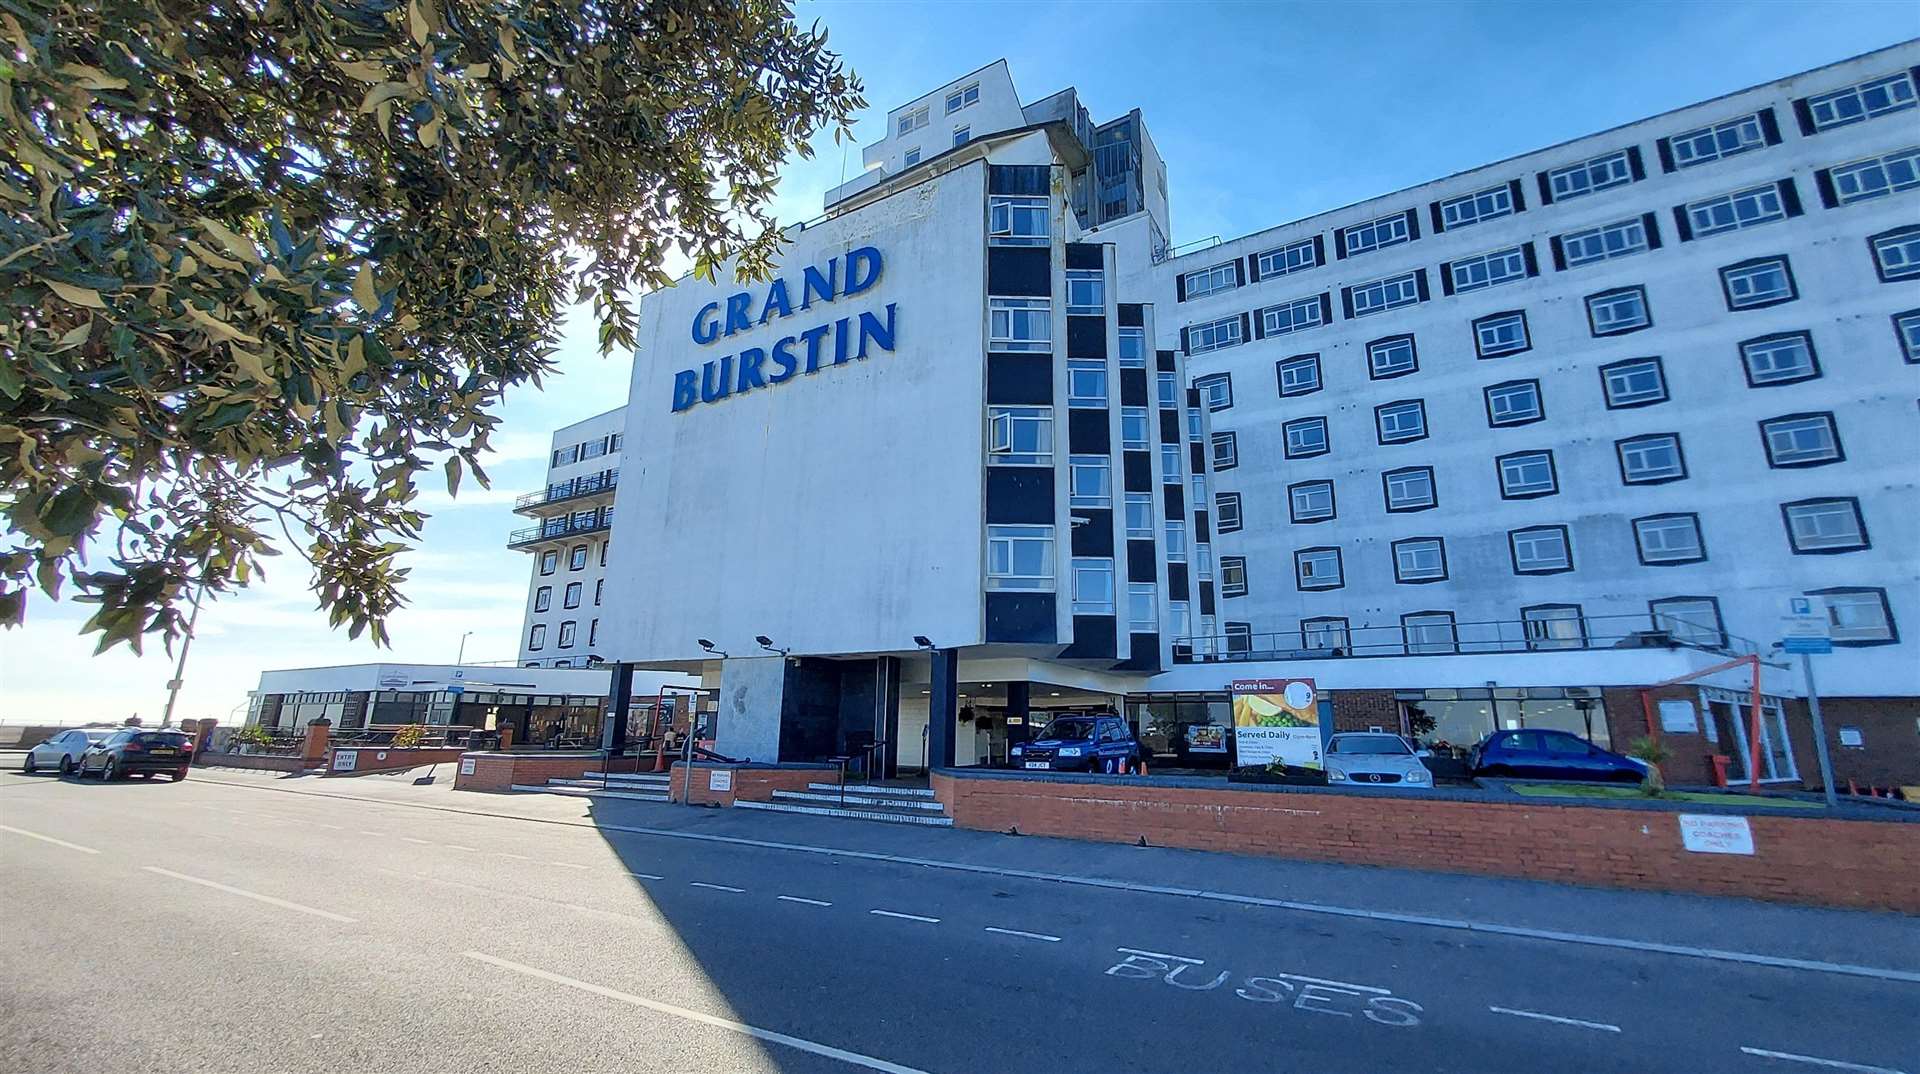 The Grand Burstin hotel in Folkestone harbour is part of the Britannia chain